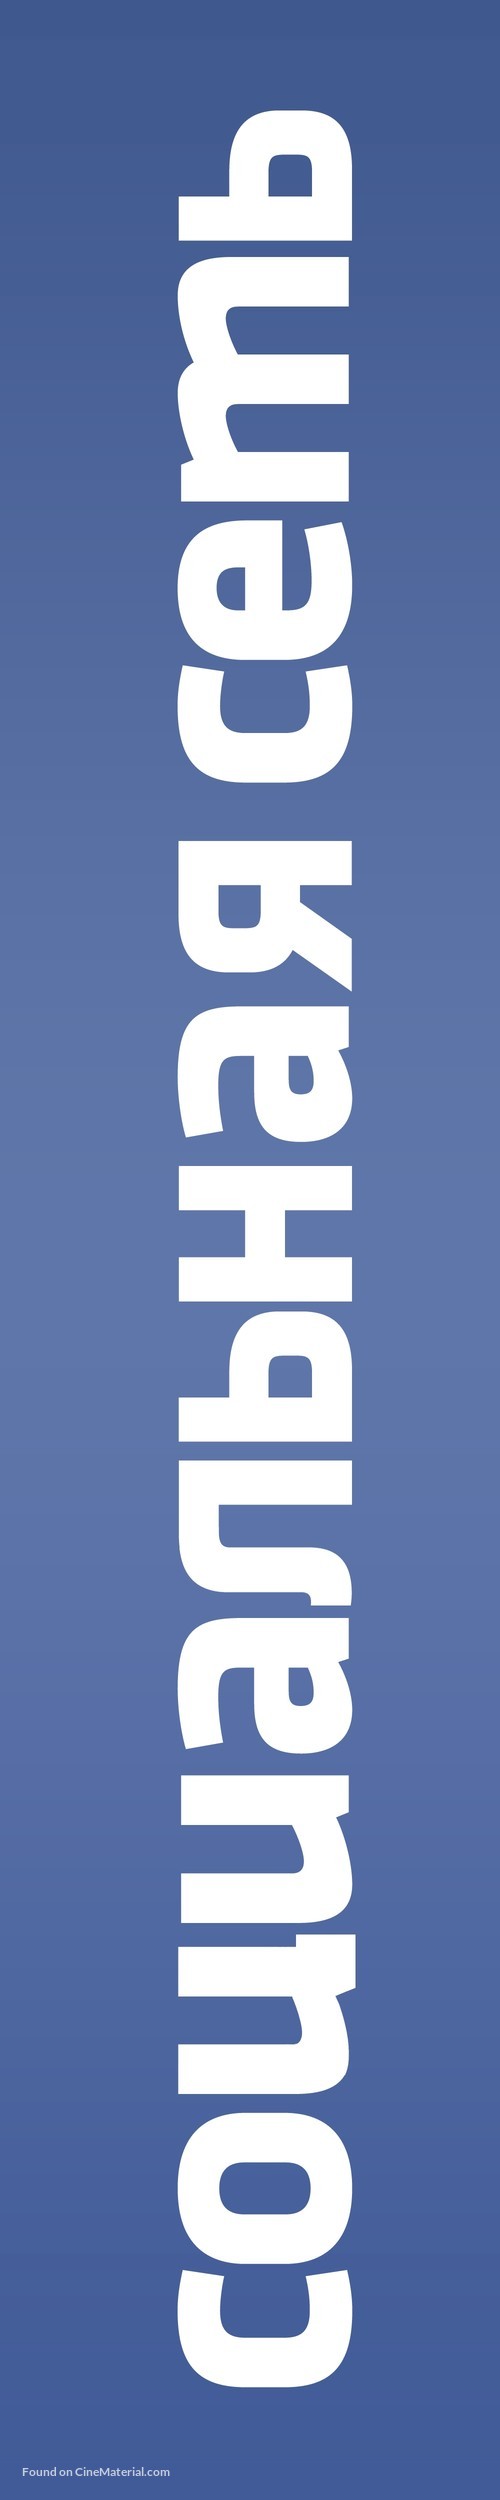 The Social Network - Russian Logo